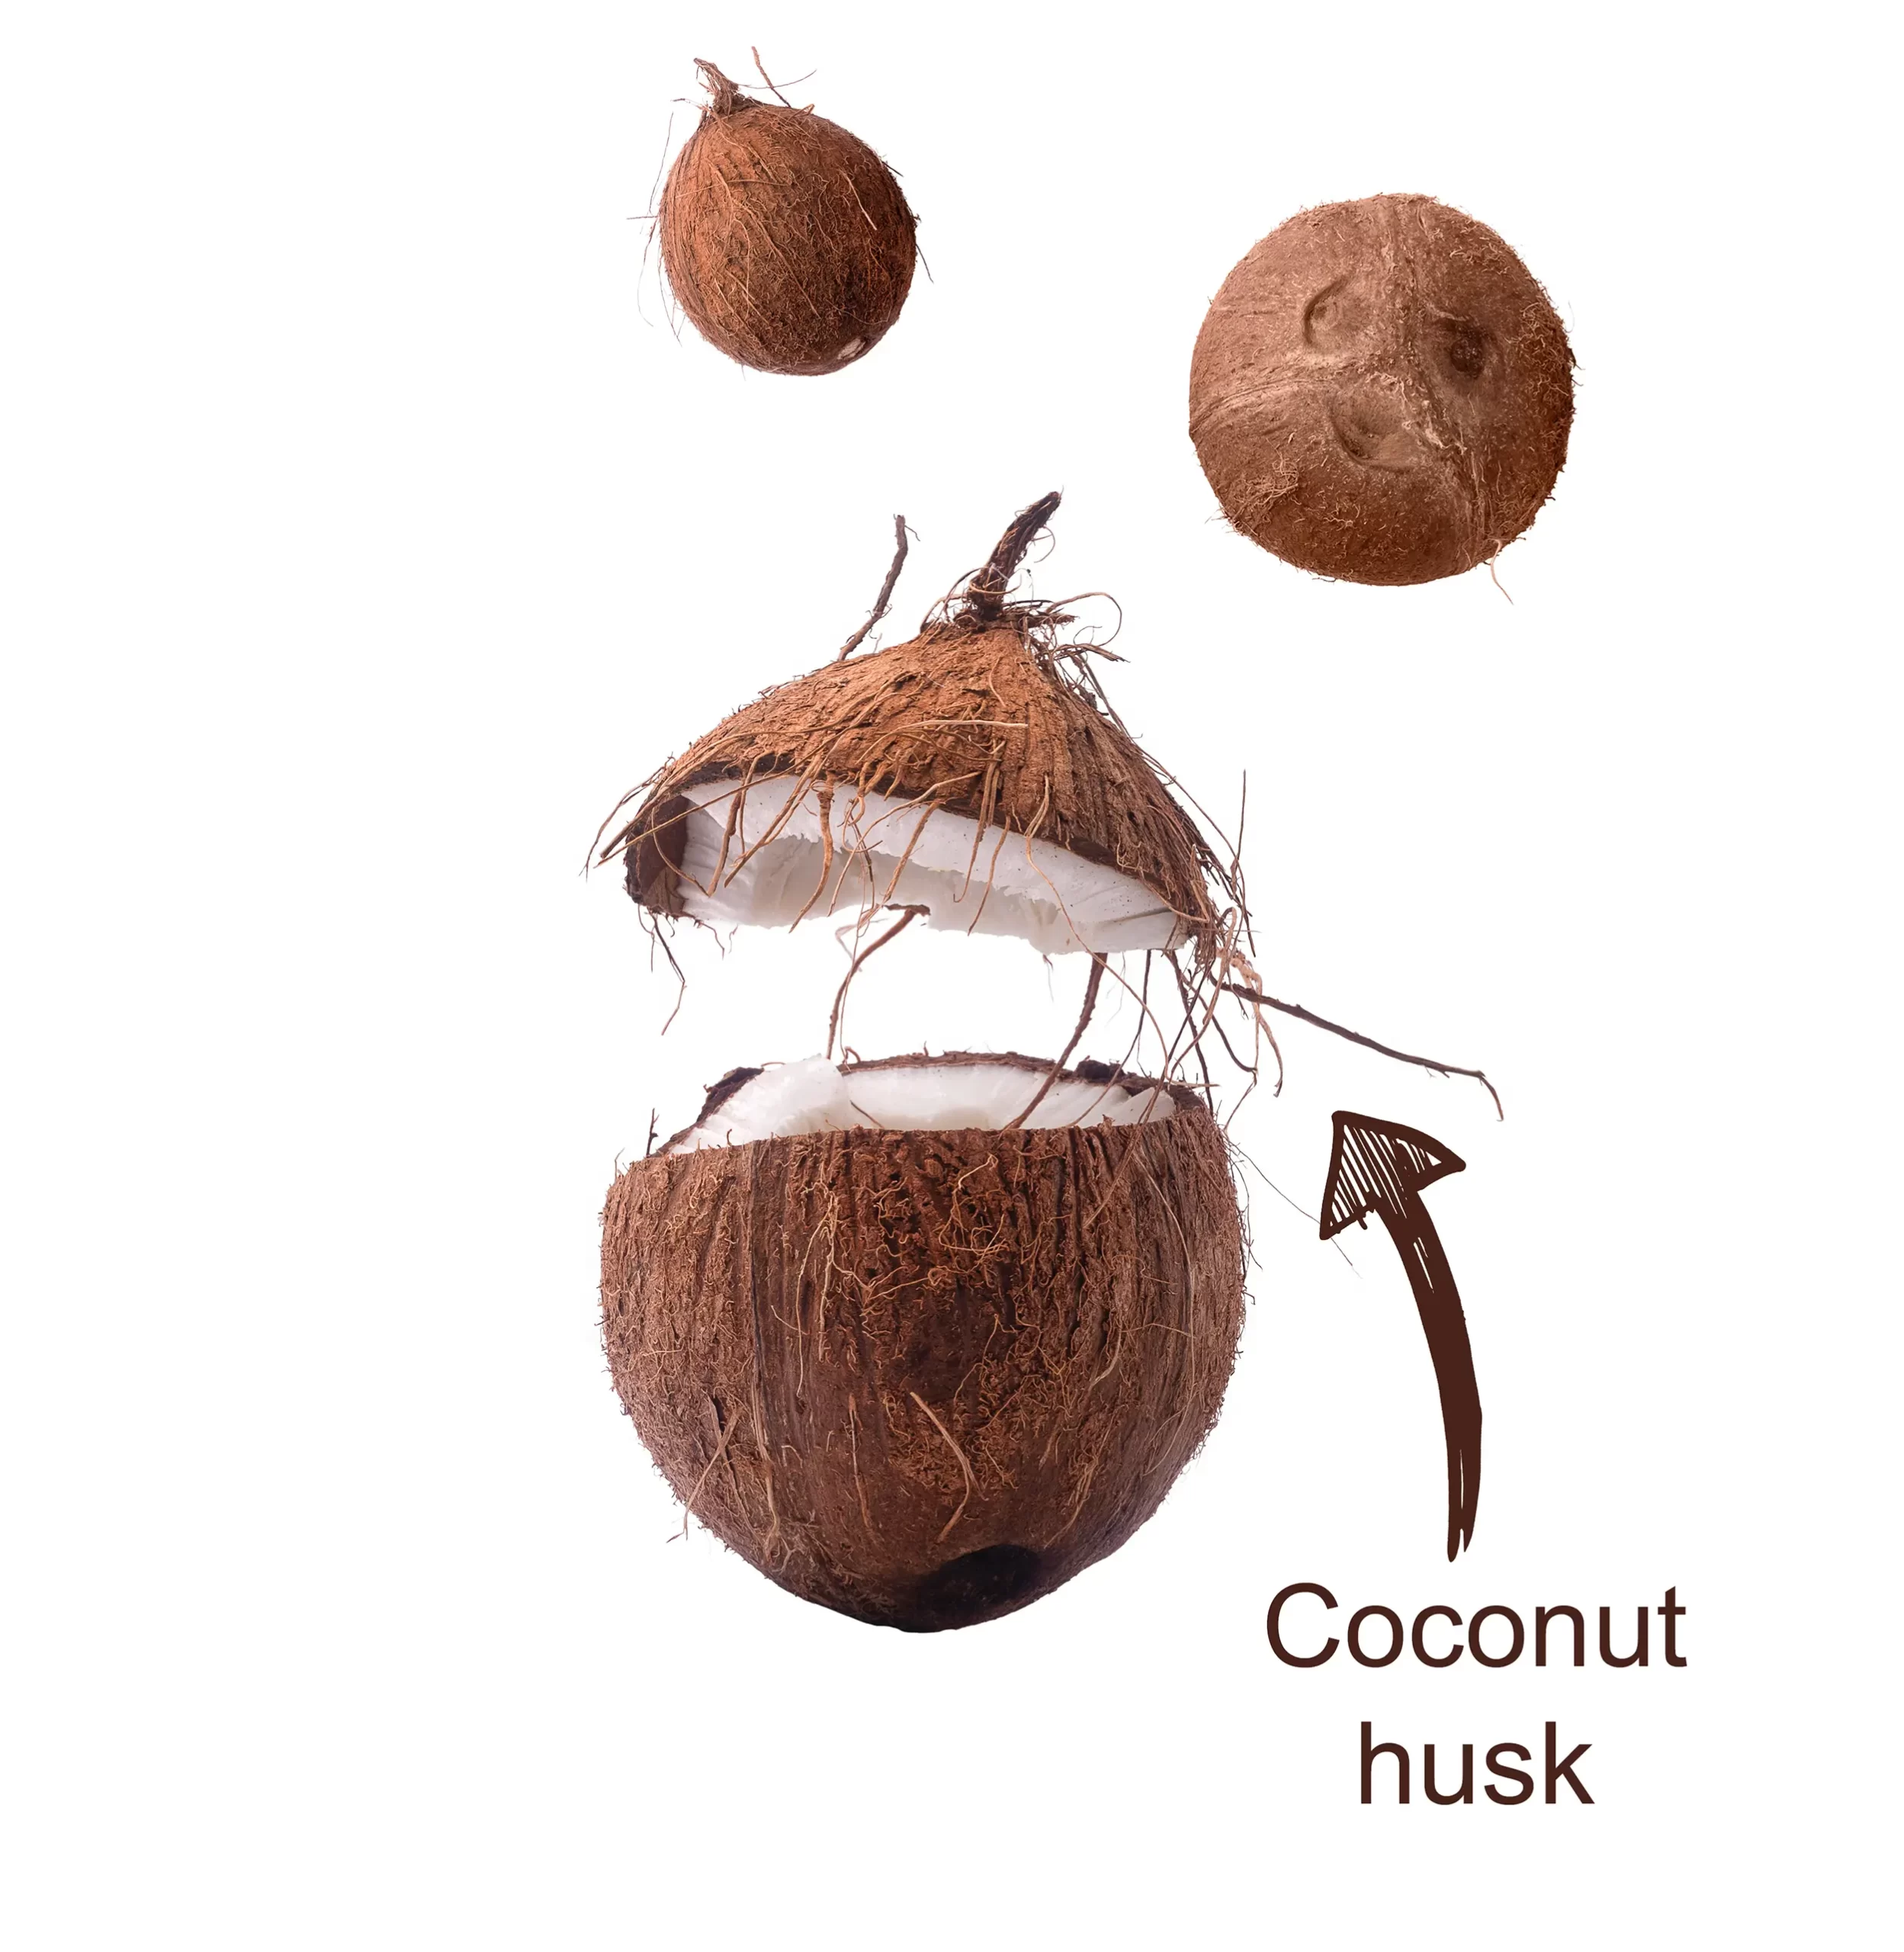 Coconut husk photo